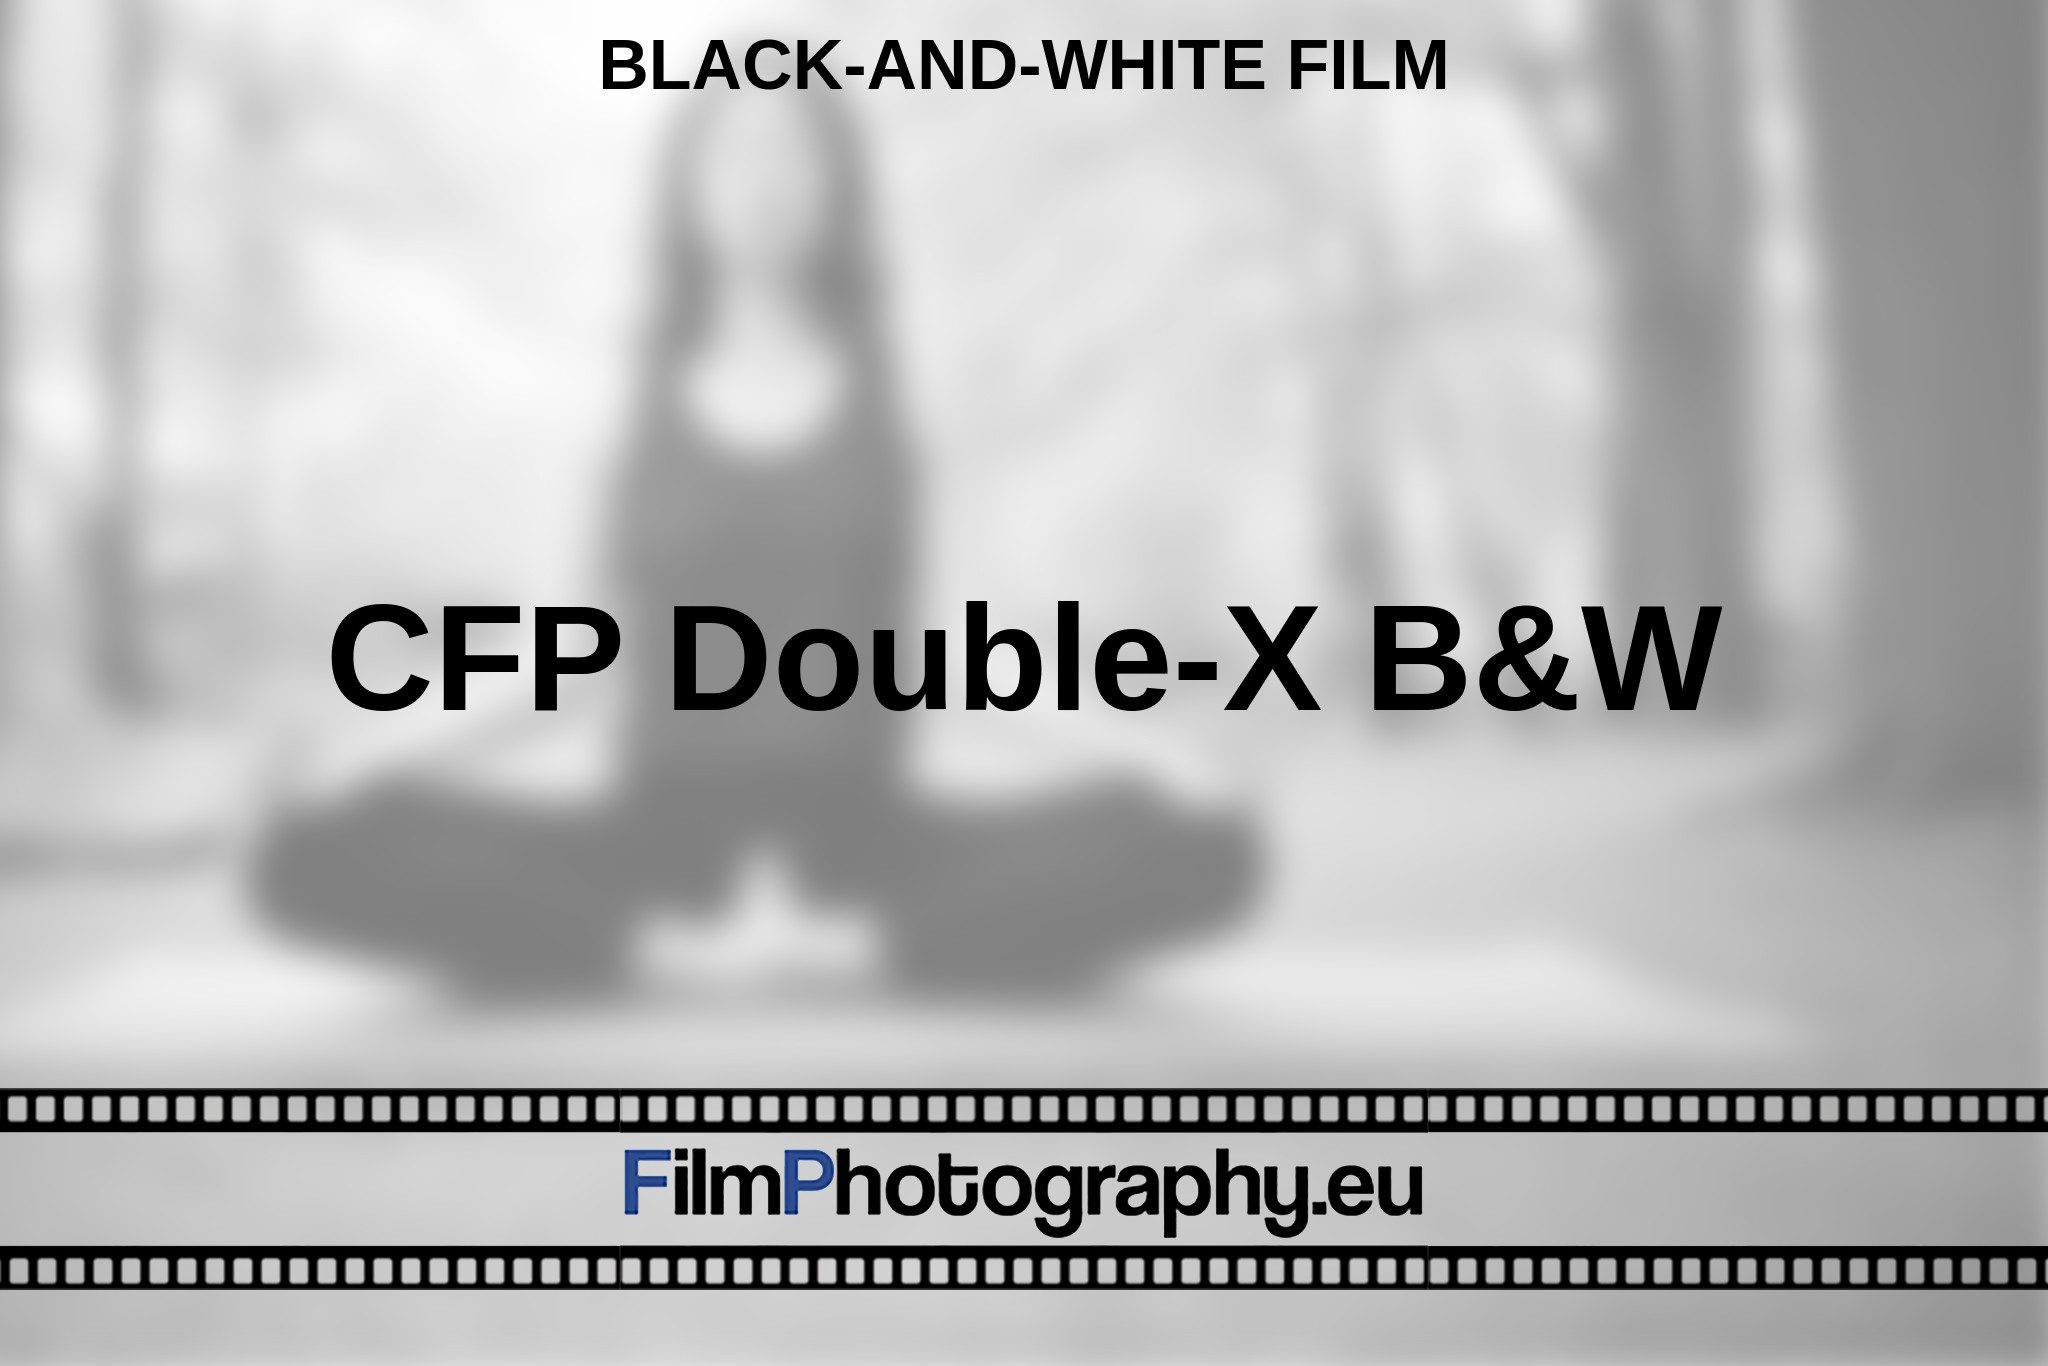 cfp-double-x-b-w-black-and-white-film-bnv.jpg